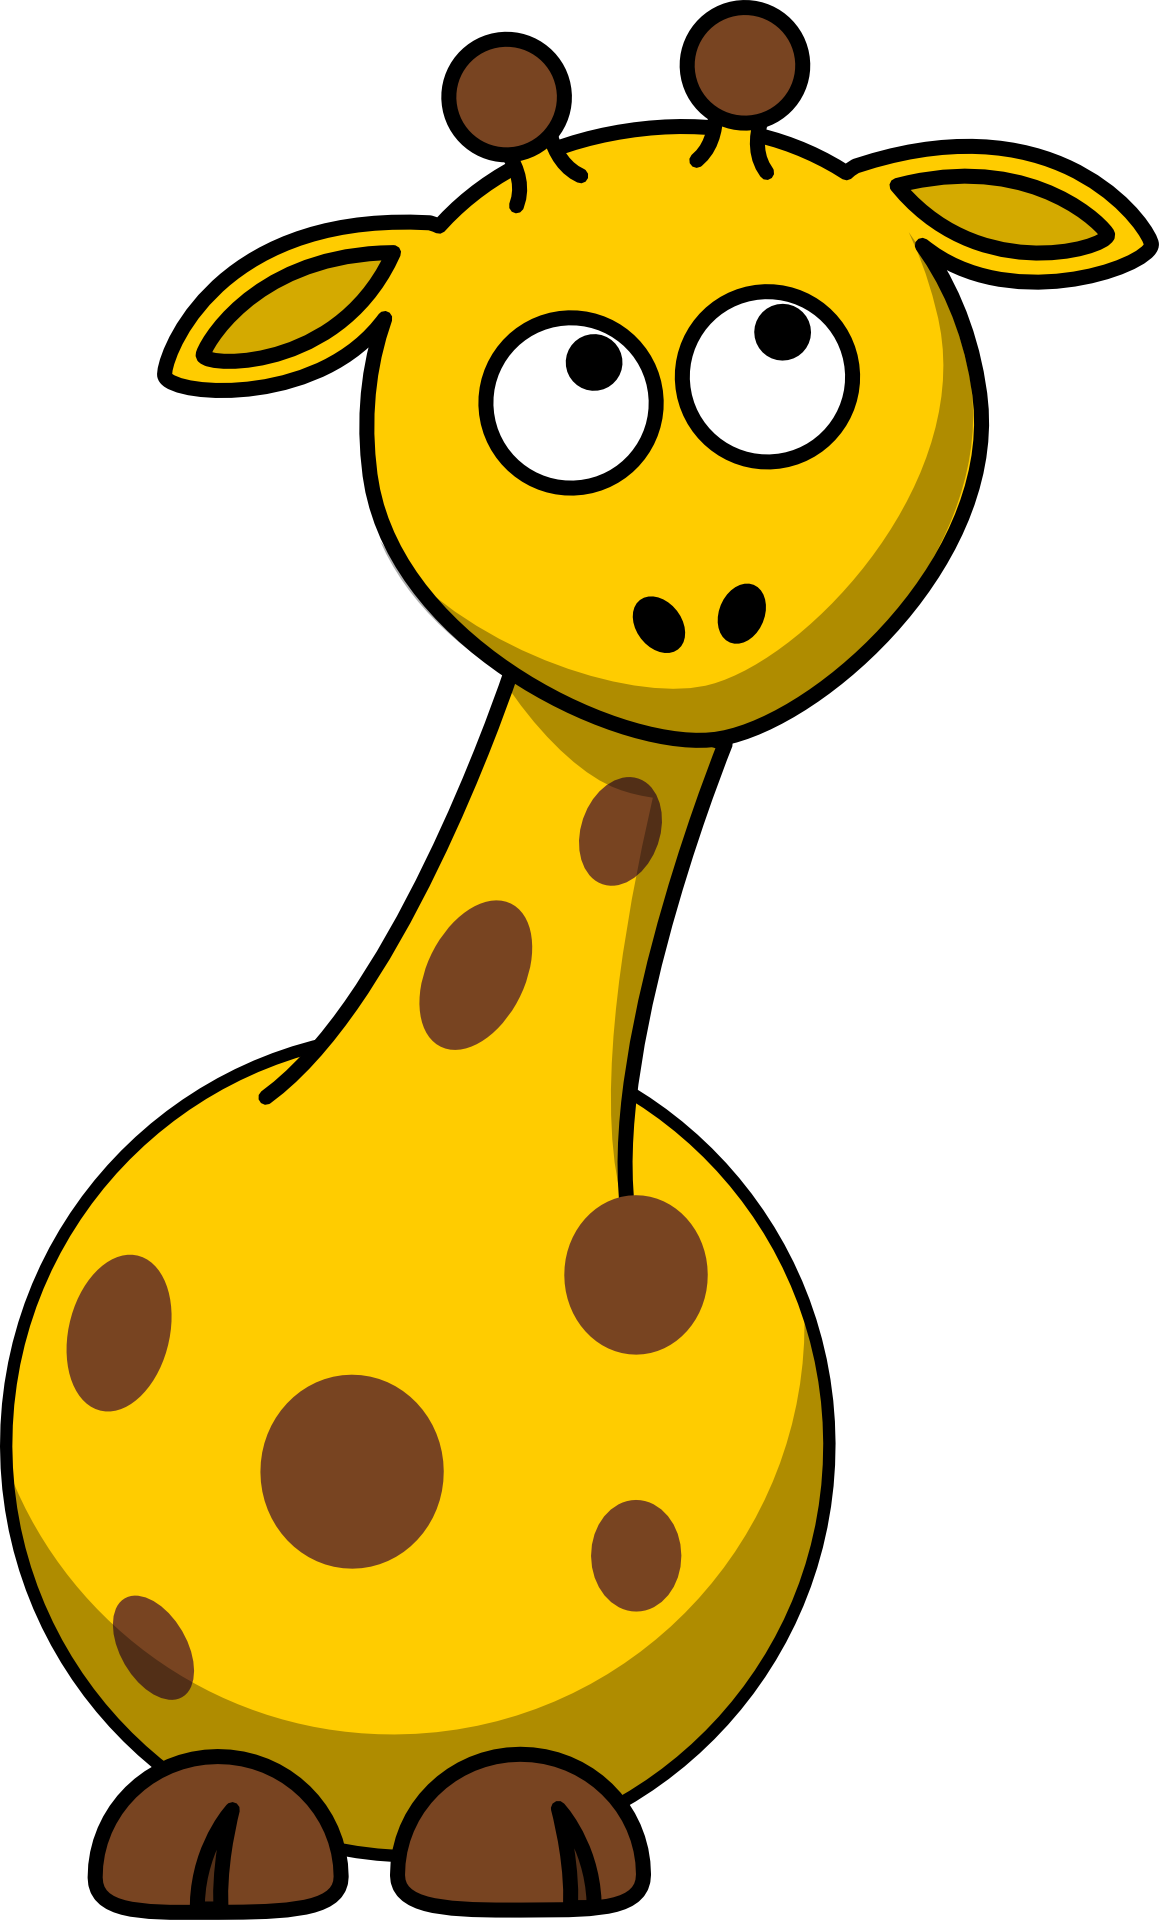 Small Vector Giraffe PNG Transparent Image